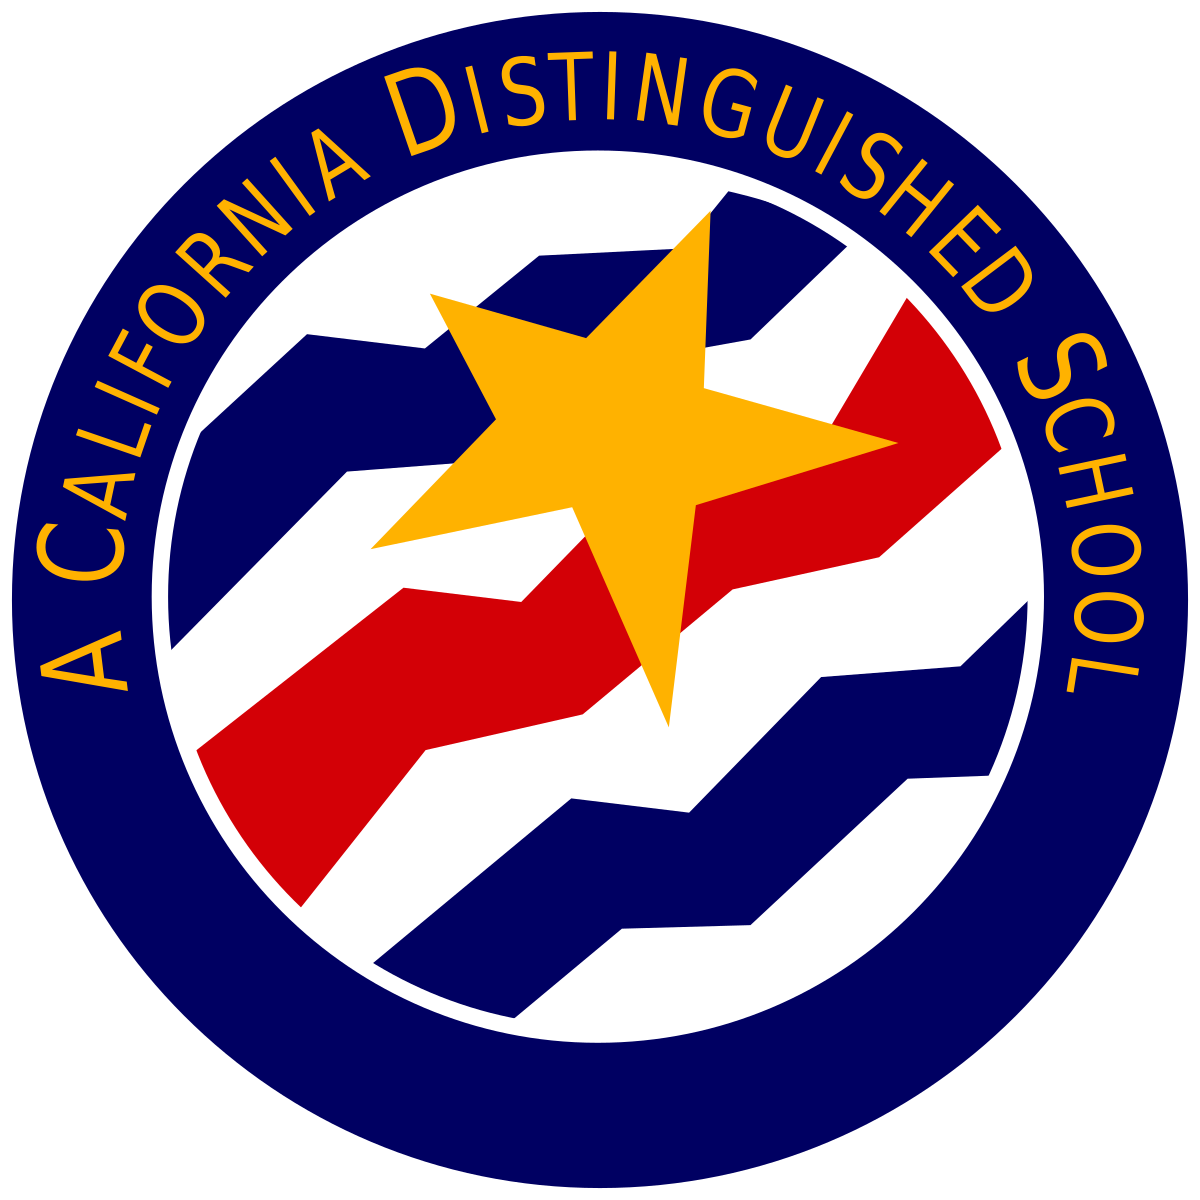 A Califpornia Distinguished School logo